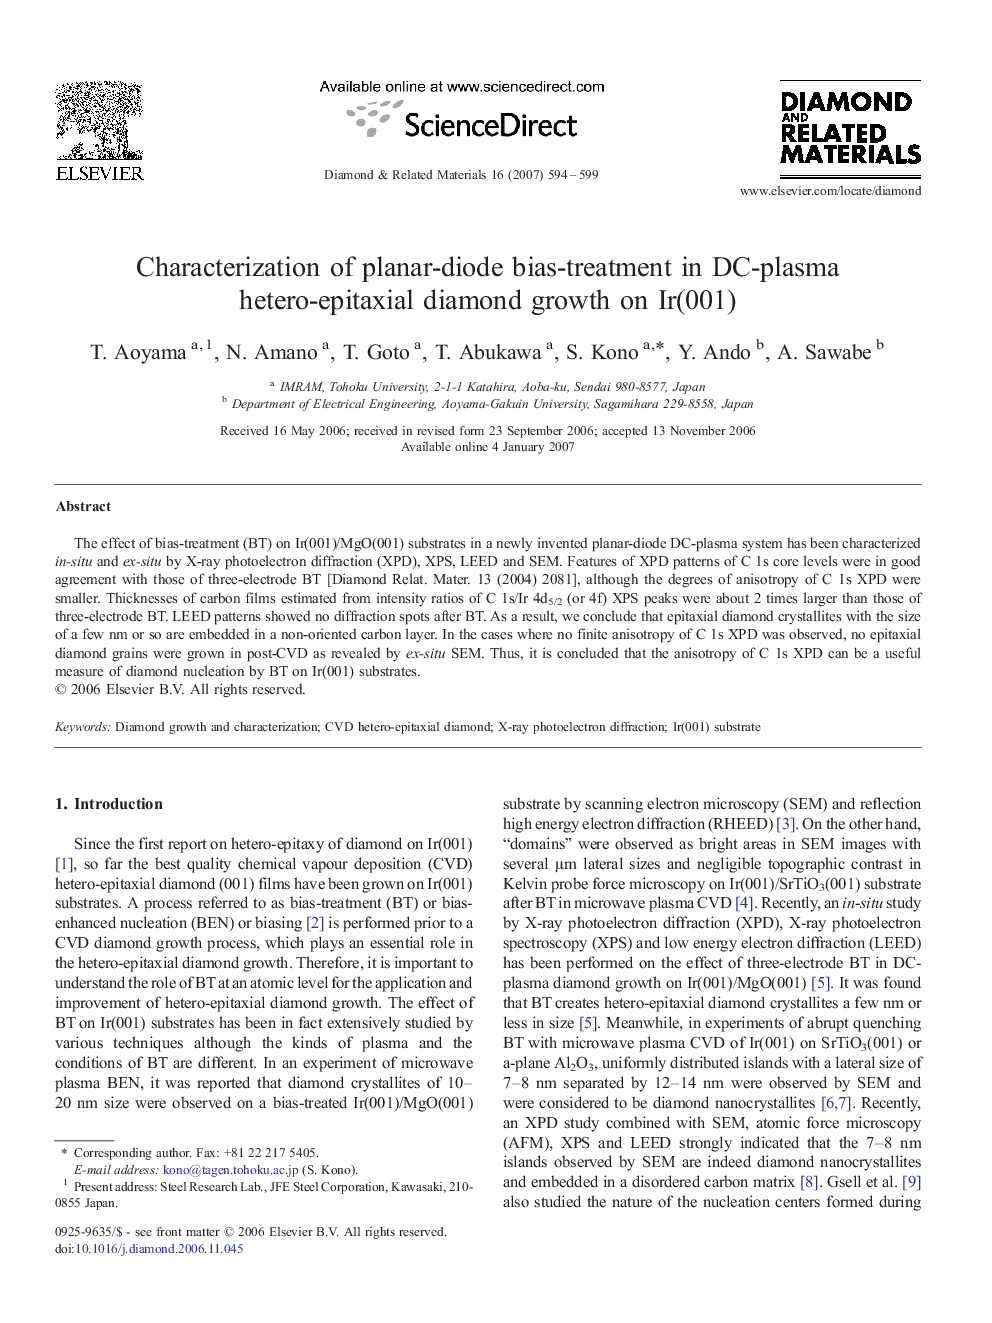 Characterization of planar-diode bias-treatment in DC-plasma hetero-epitaxial diamond growth on Ir(001)